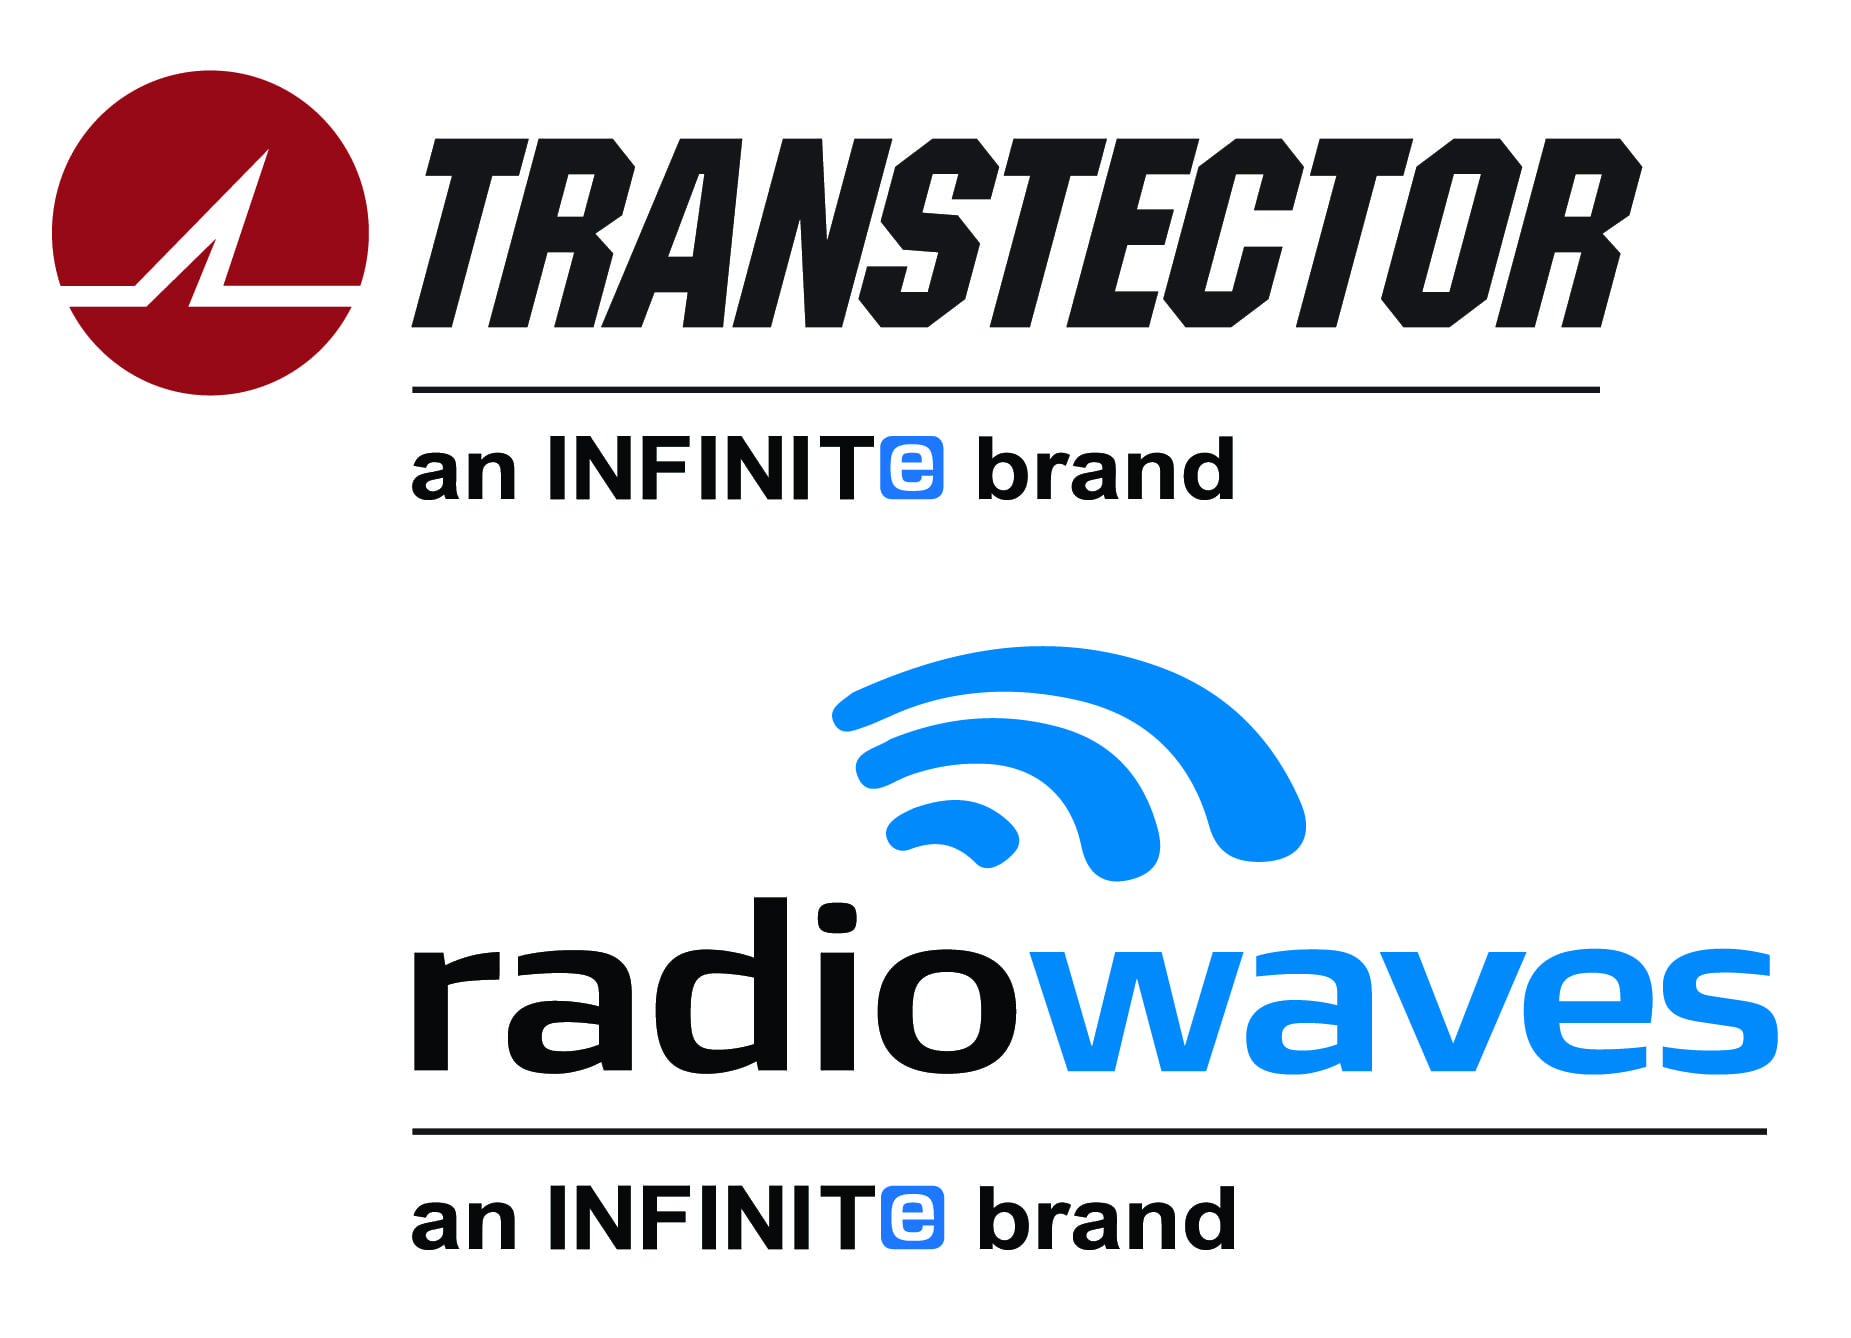 RadioWaves / Transtector